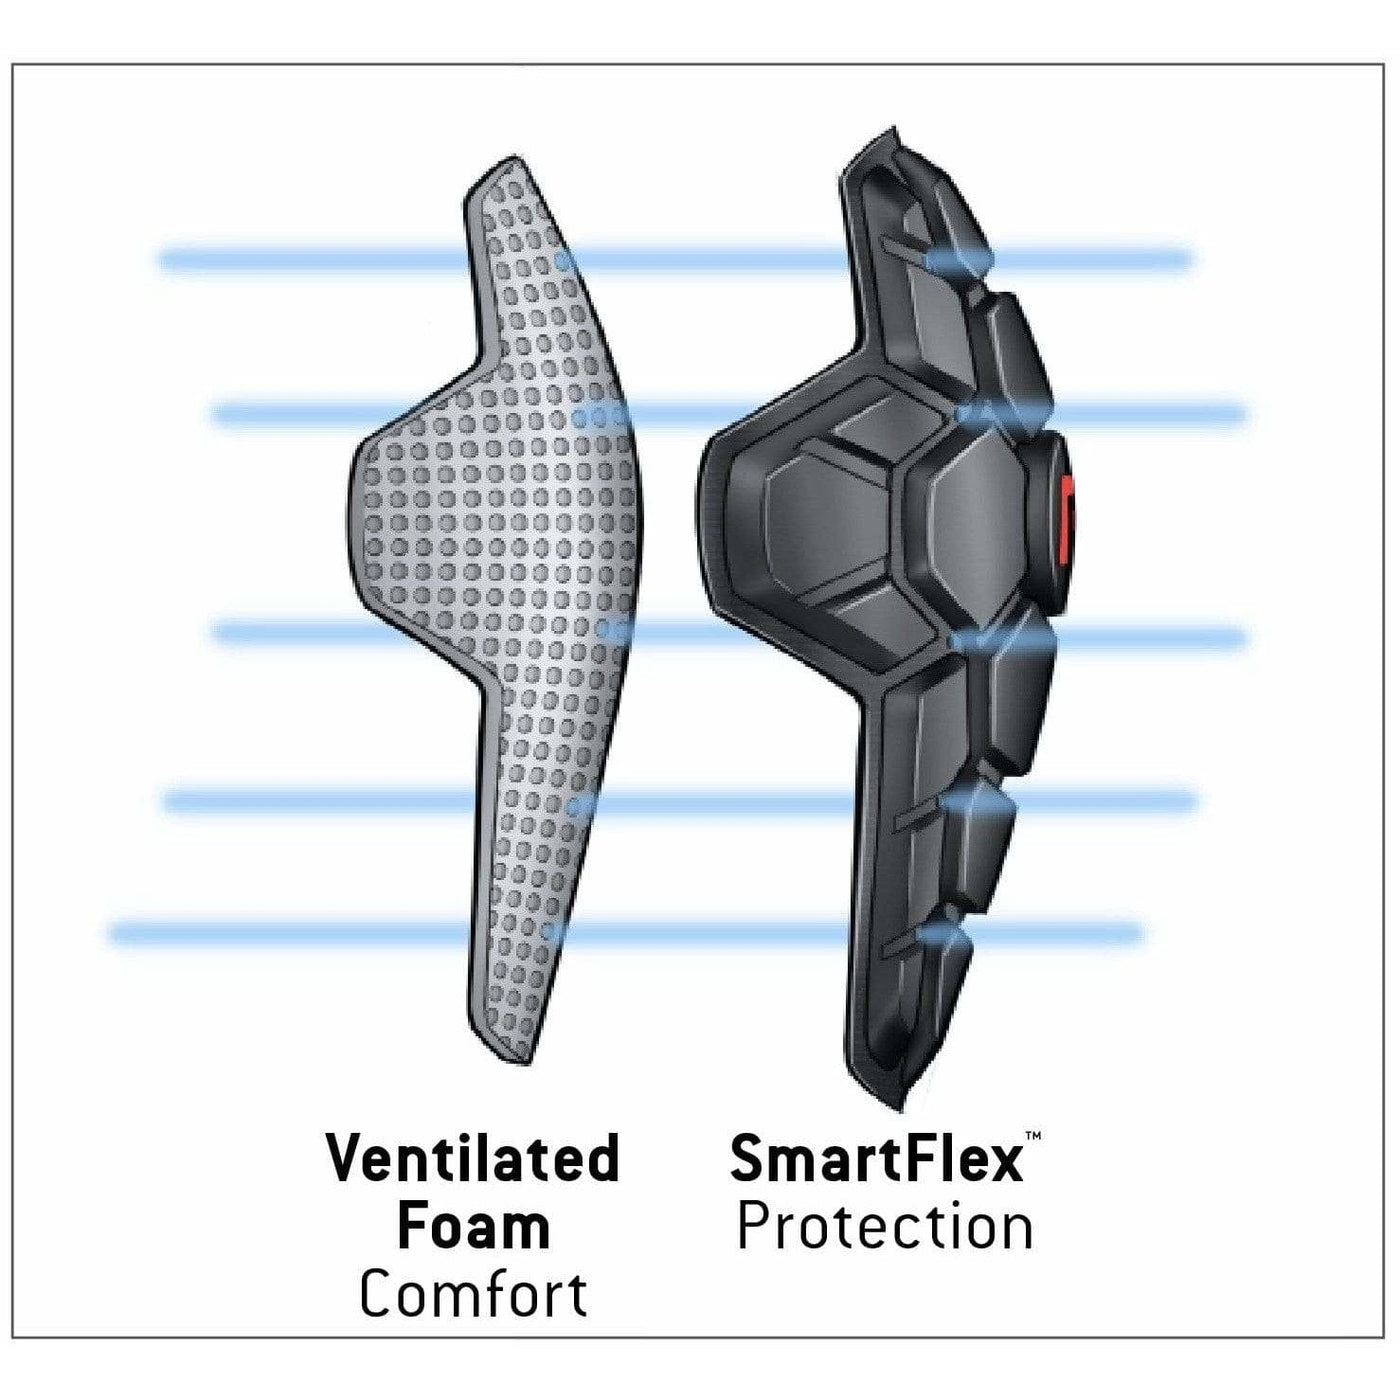 G-Form SmartFlex protection